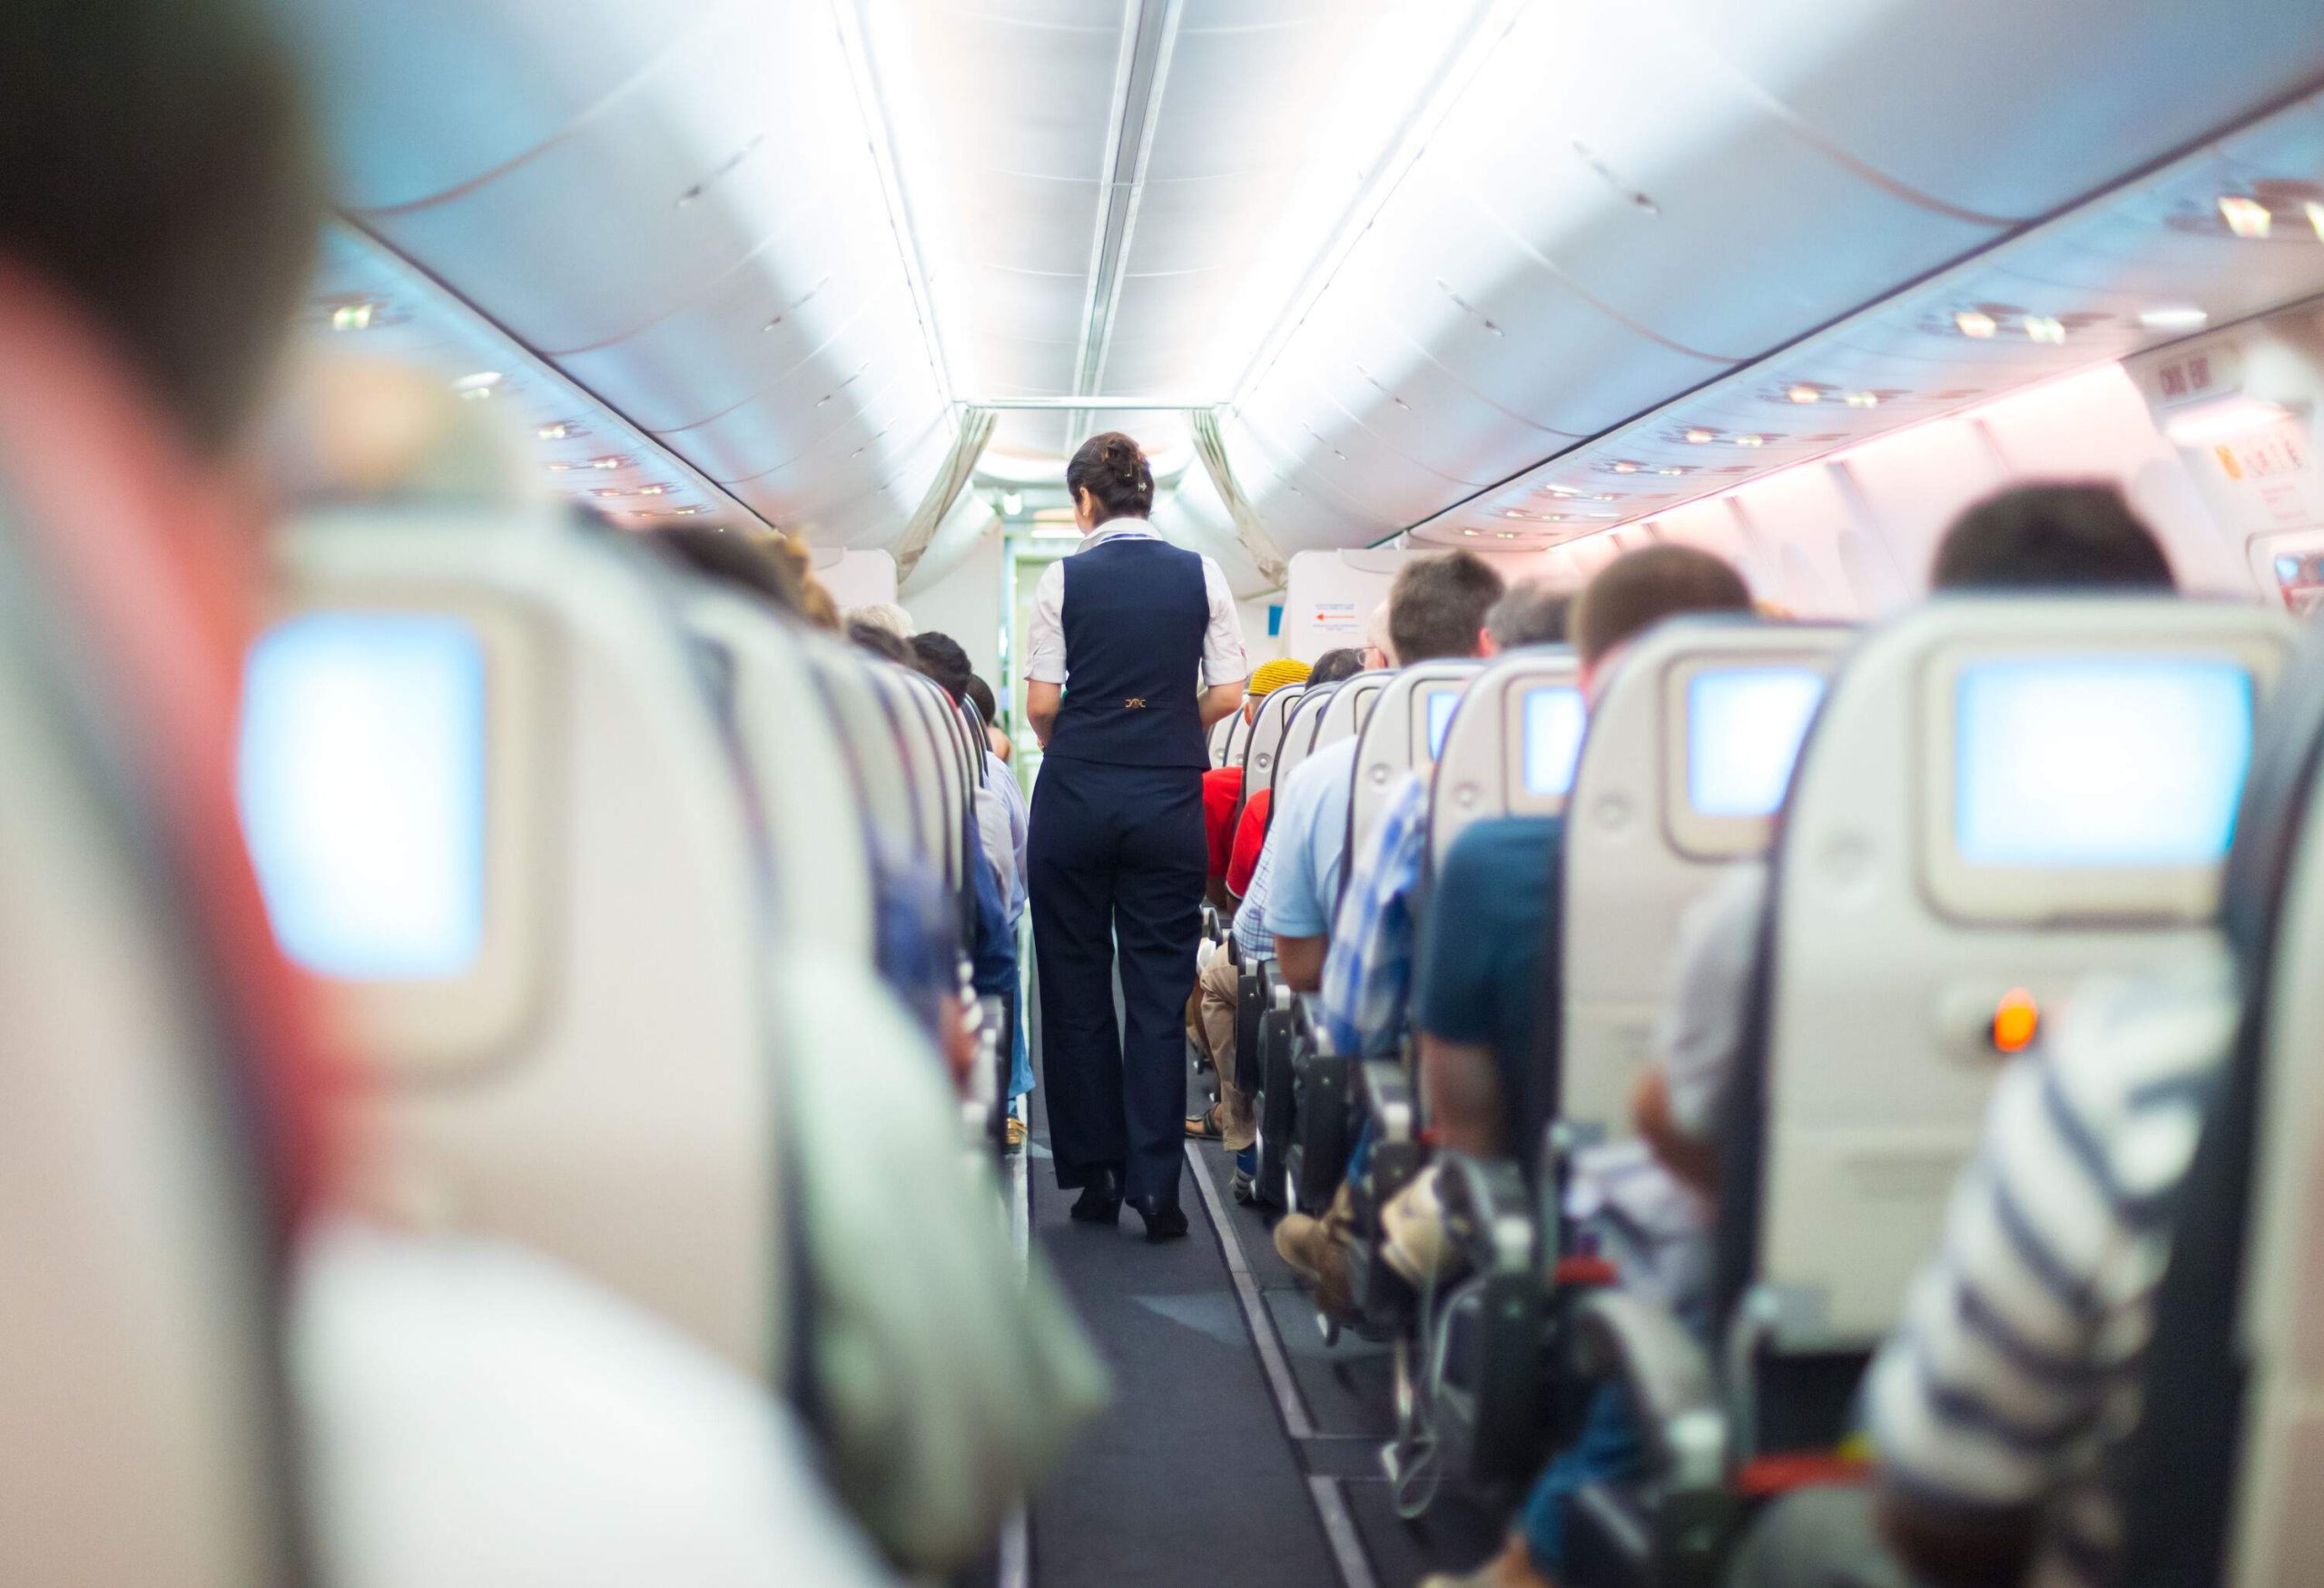 A flight attendant walking through the aisle of an airplane between passengers.